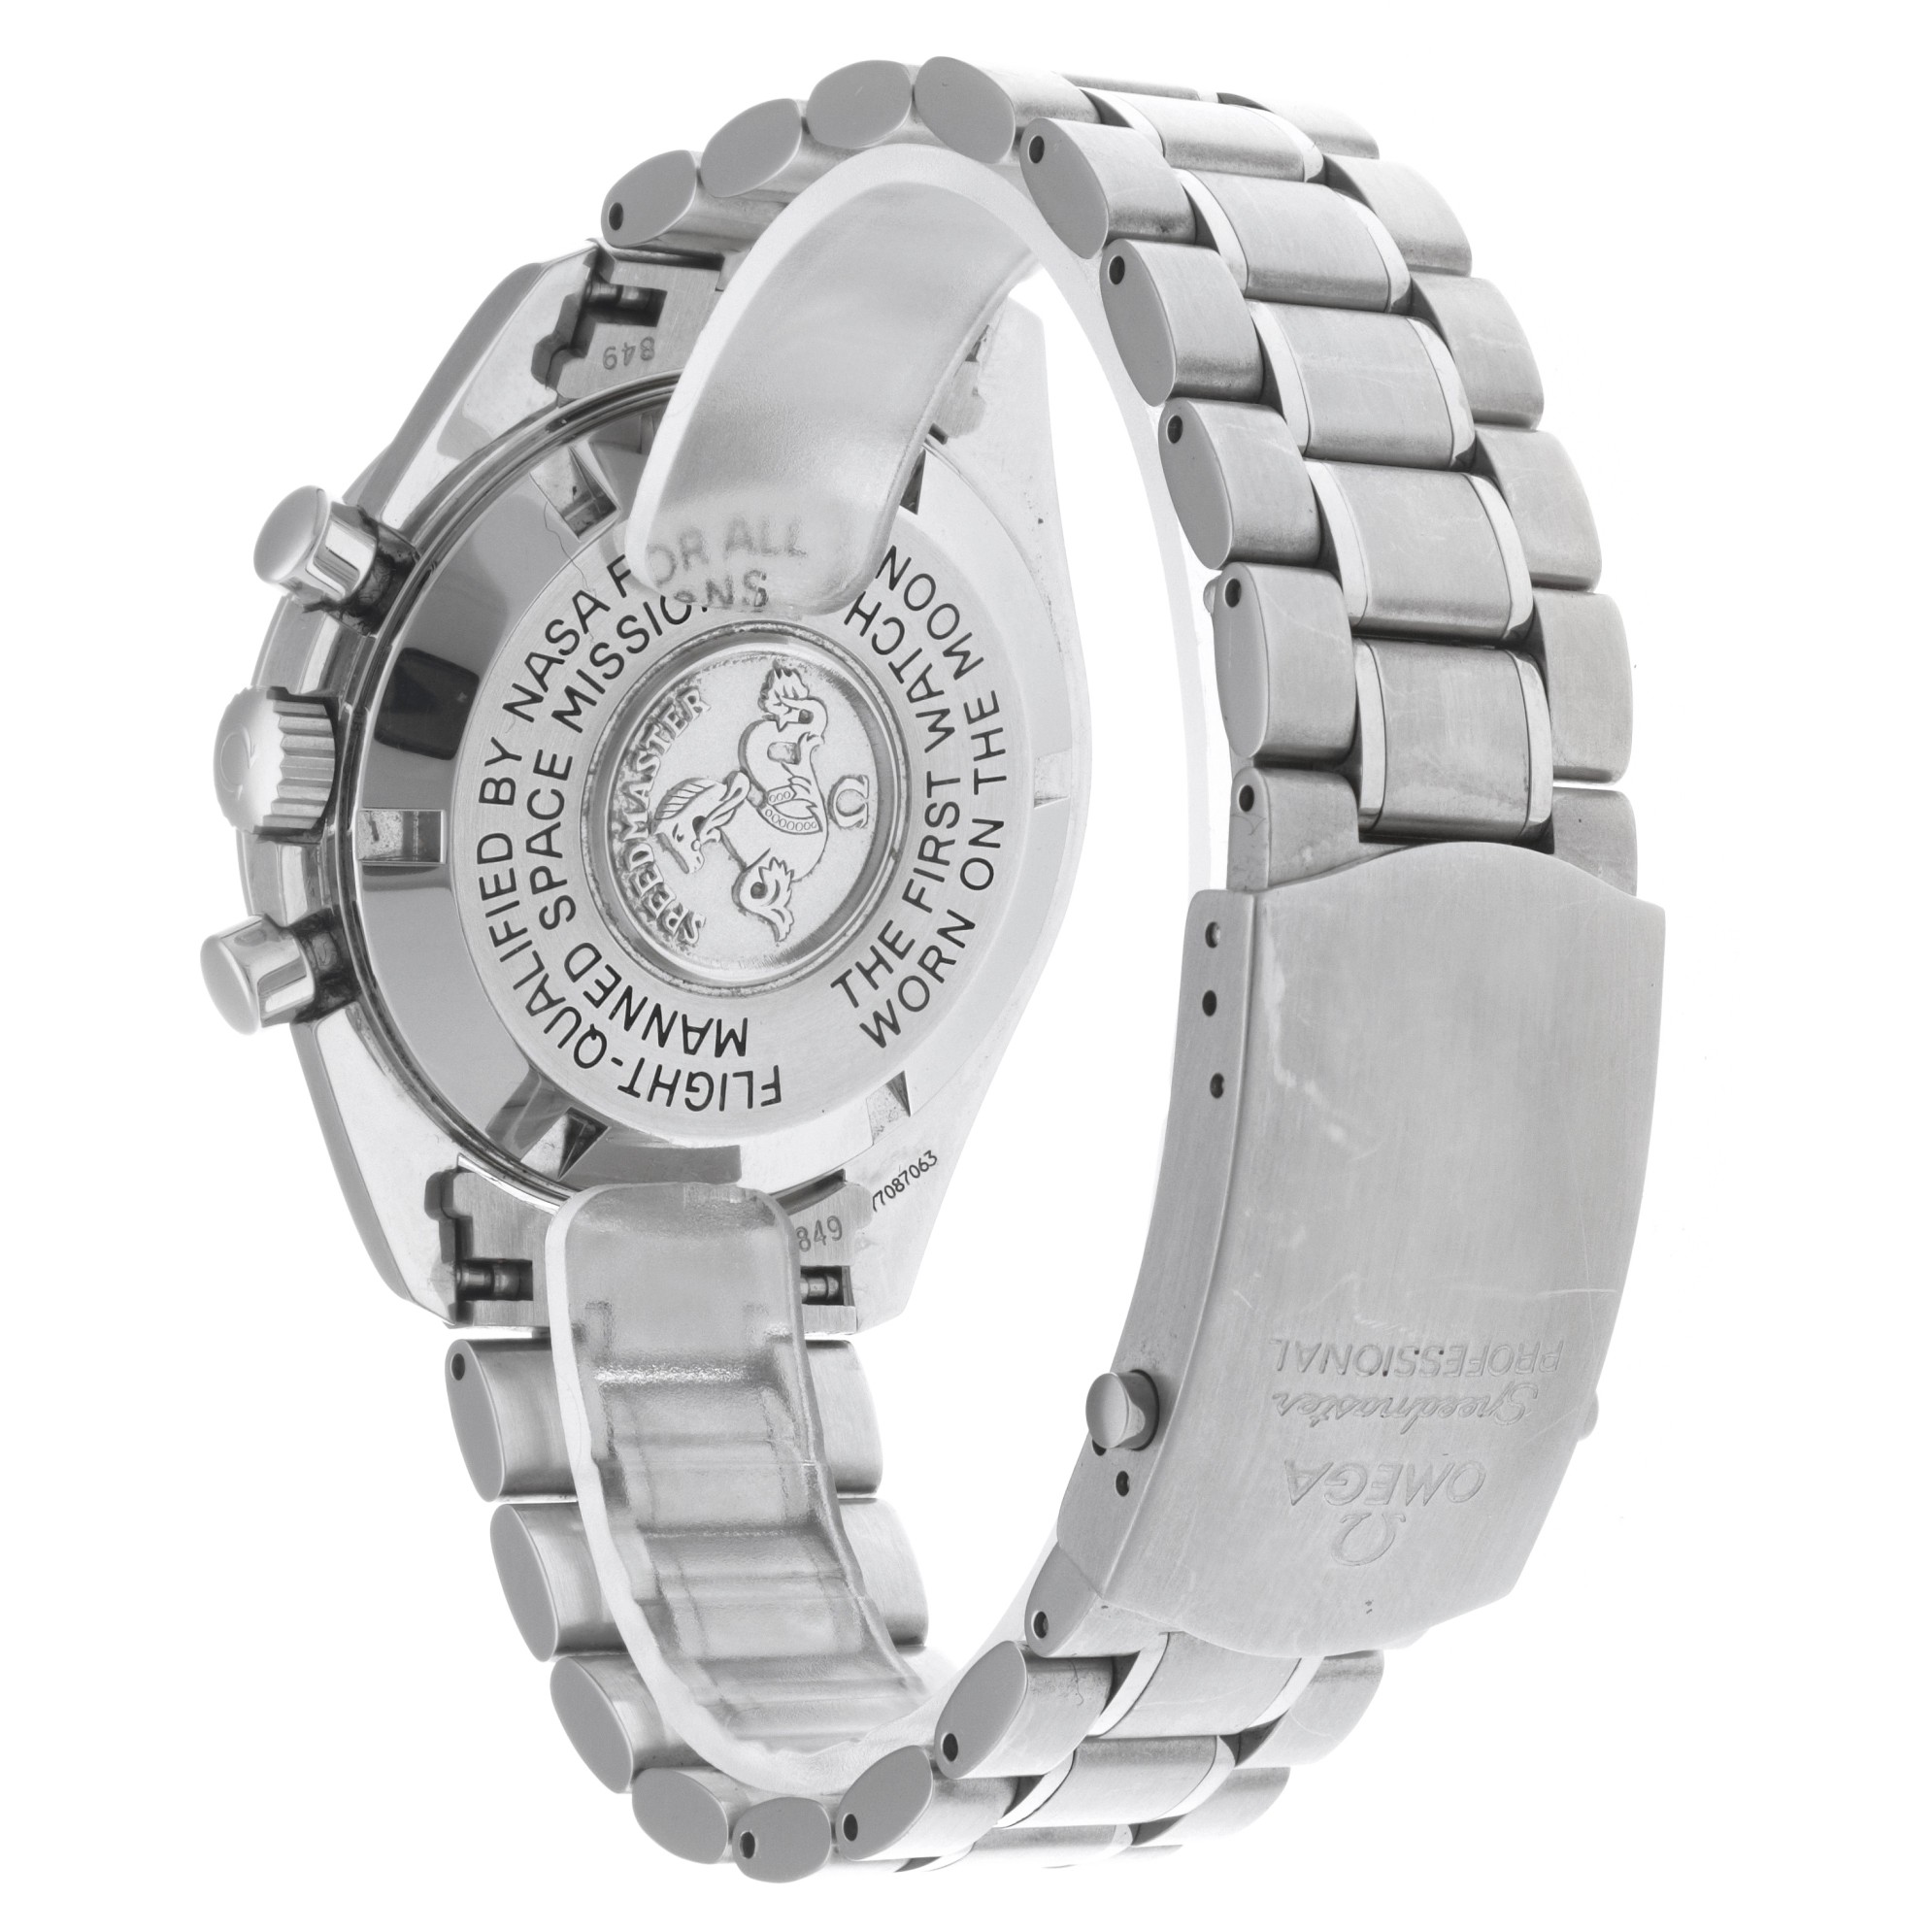 No Reserve - Omega Speedmaster Professional 35705000 - Men's watch - 2003. - Image 3 of 6